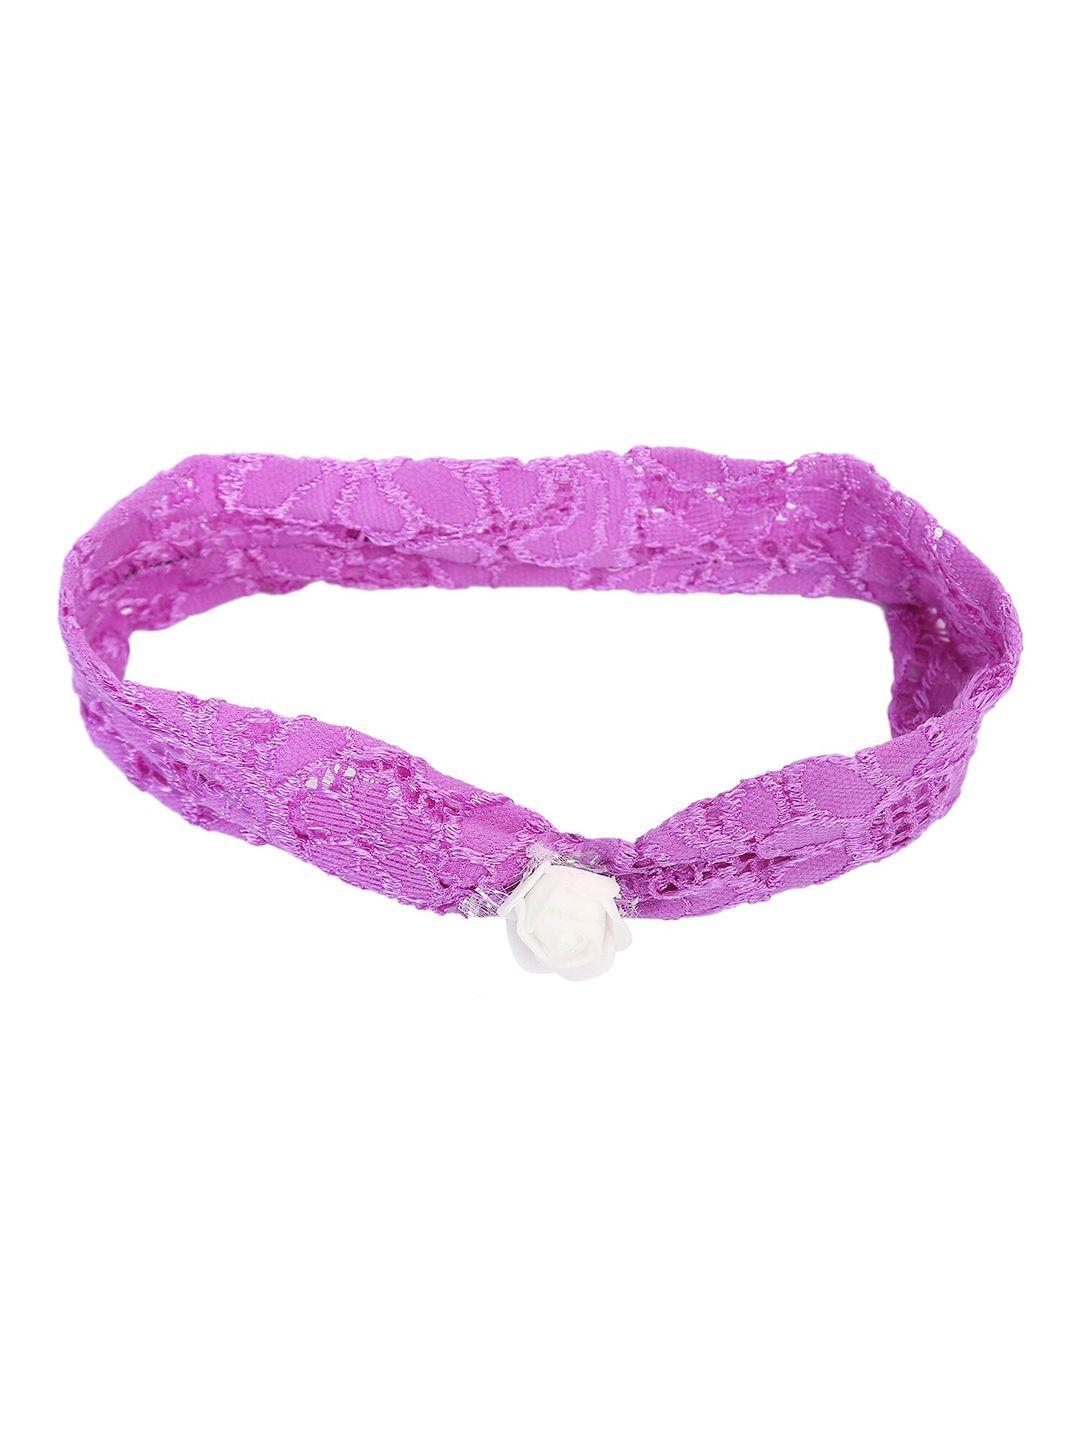 samsara couture girls lavender & white lace hairband